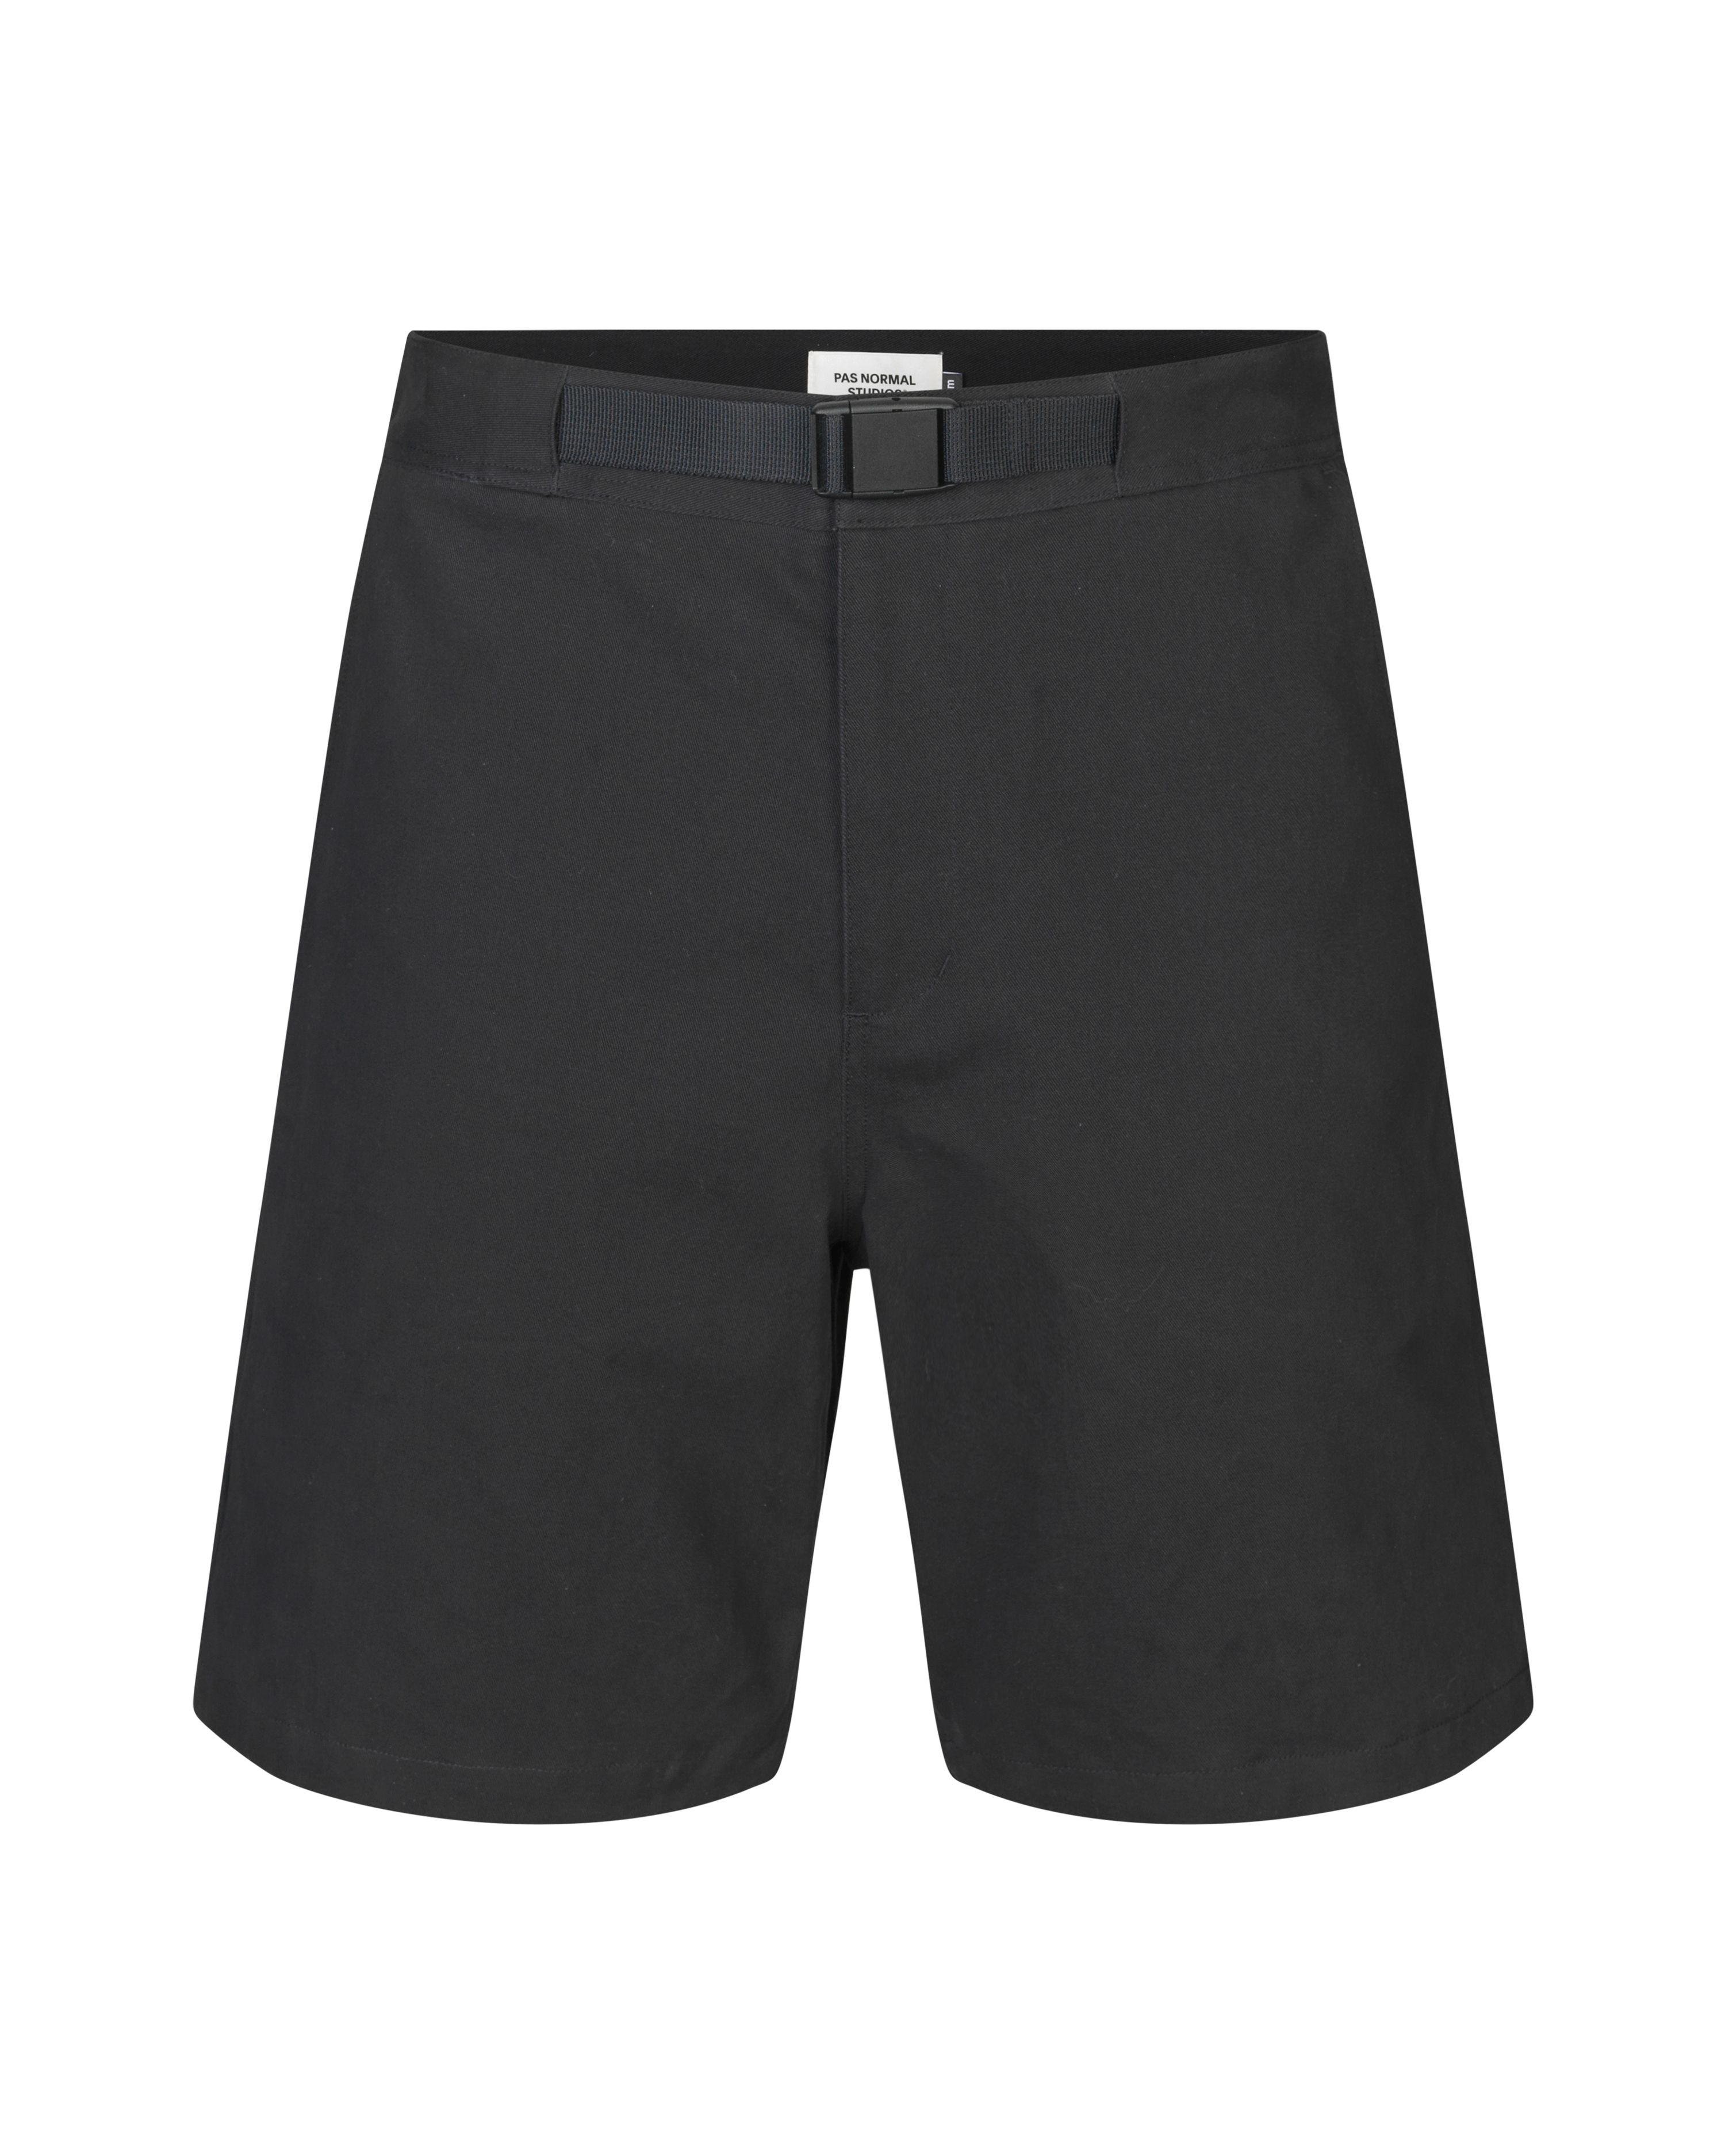 Off-Race Cotton Twill Shorts - Black